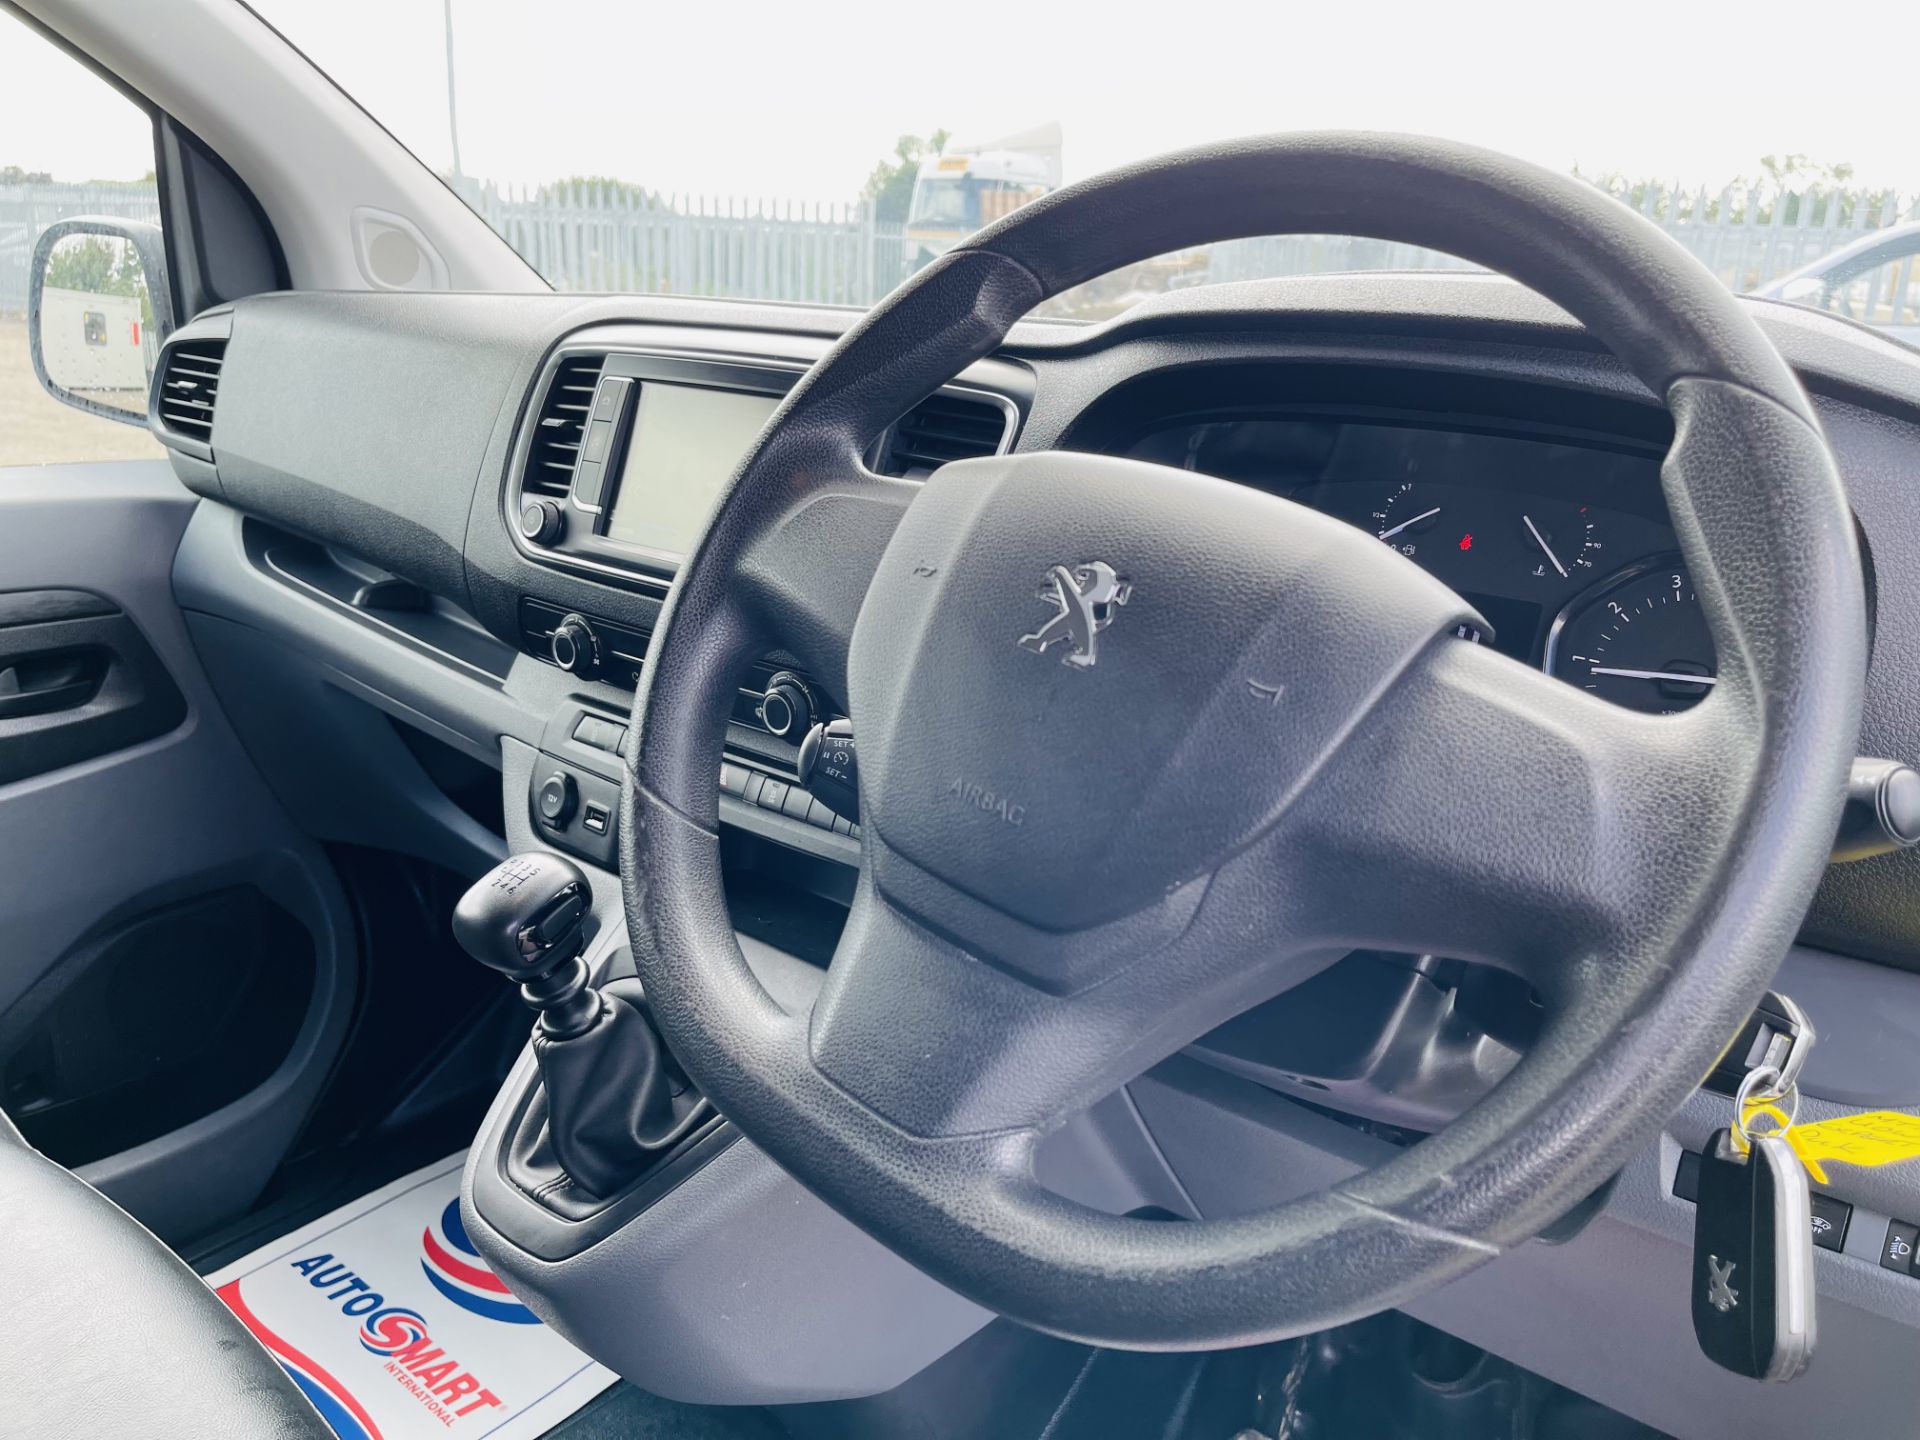 Peugeot Expert 1.6 Blue HDI Professional 2018 '18 Reg' Air con -Sat Nav-Euro 6b ** ULEZ Compliant ** - Image 21 of 21